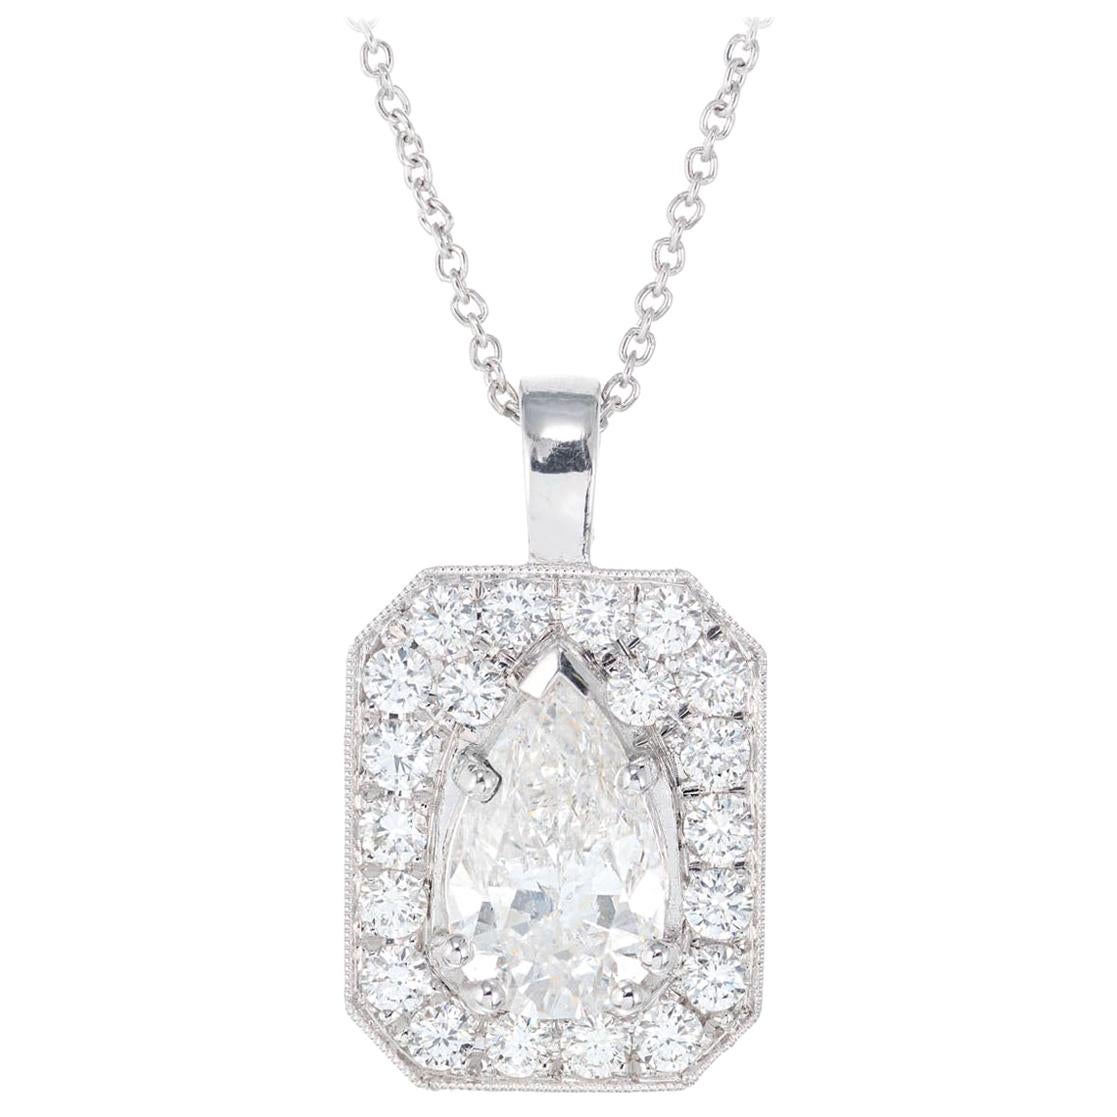 Peter Suchy EGL Certified 1.43 Carat Diamond Platinum Pendant Necklace For Sale